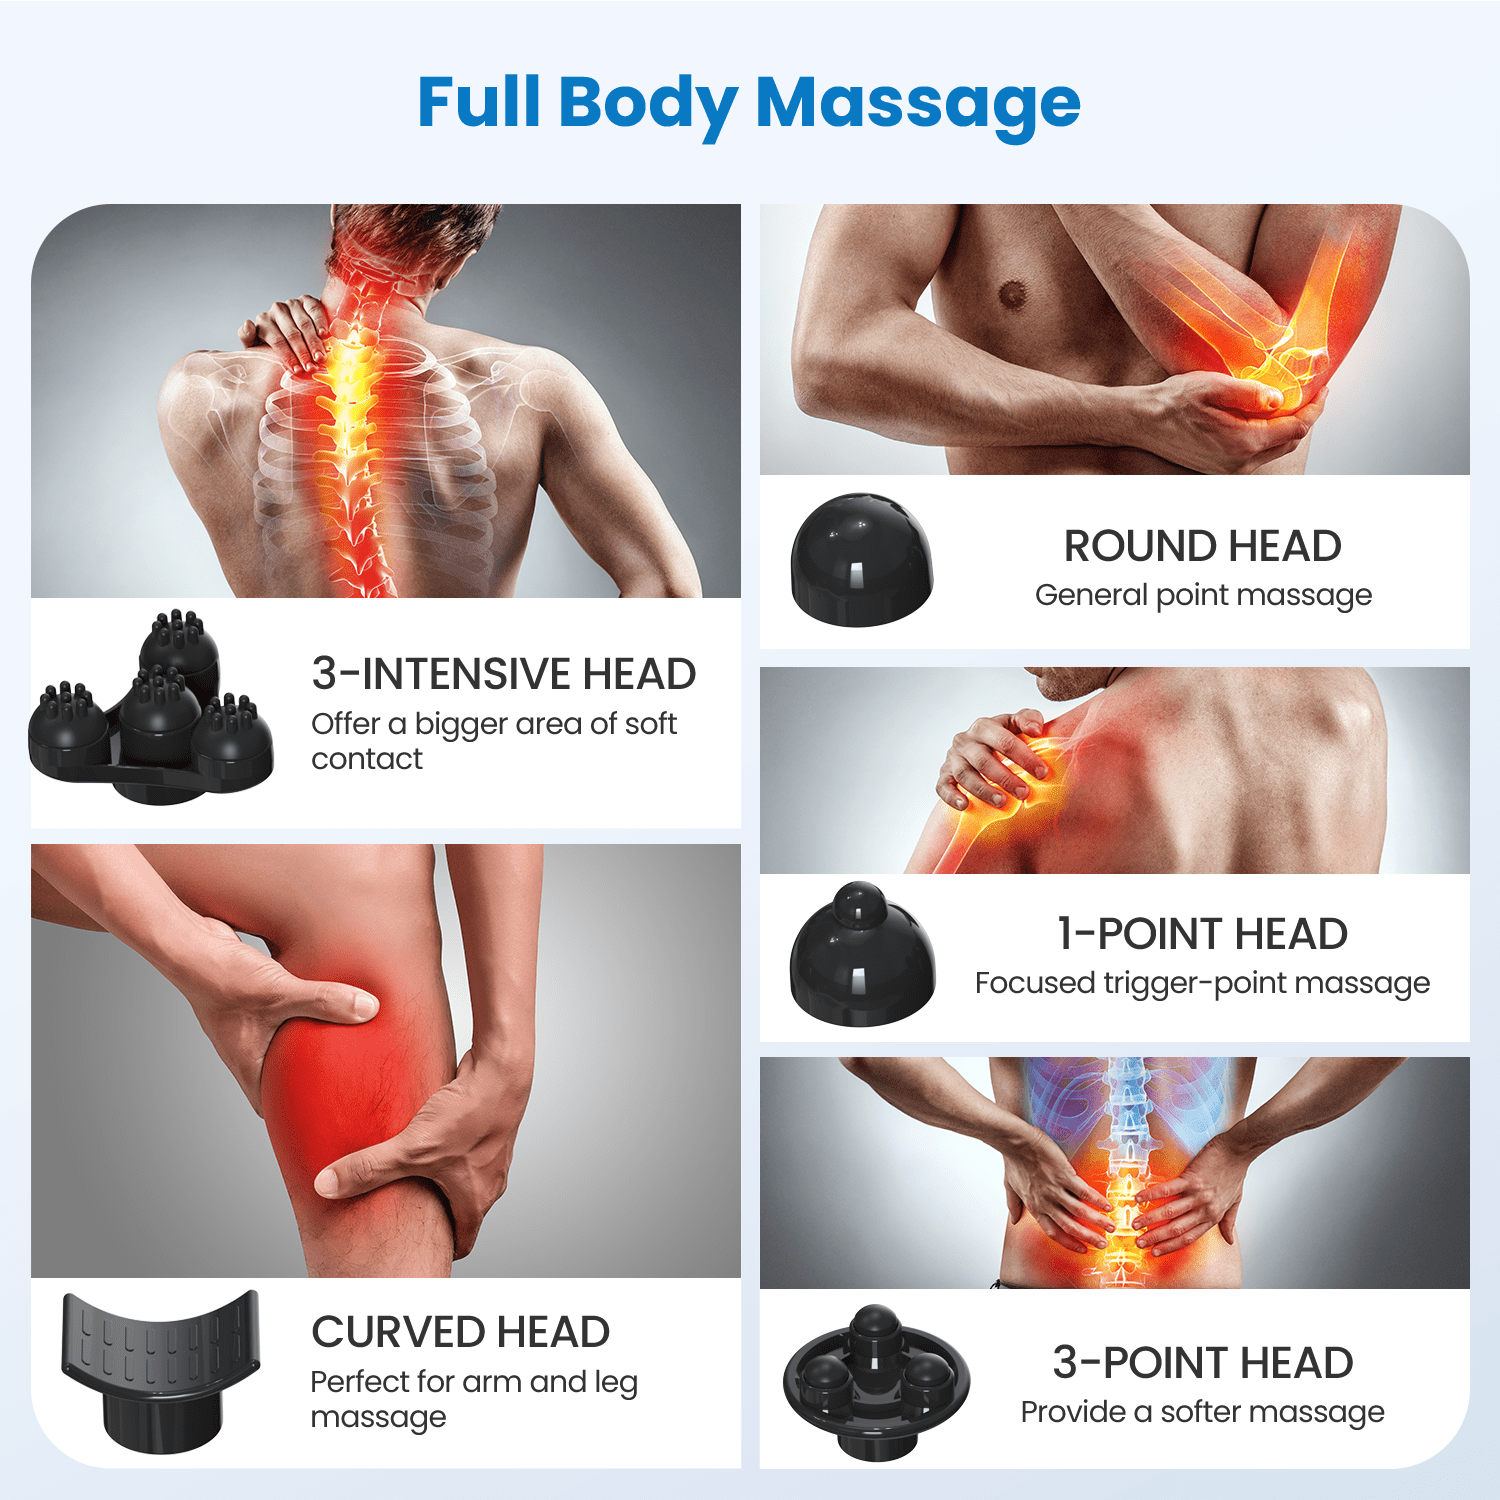 RENPHO Rechargeable Hand Held Deep Tissue Massager for Muscles, Back, Foot,  Neck, Shoulder, Leg, Cal…See more RENPHO Rechargeable Hand Held Deep